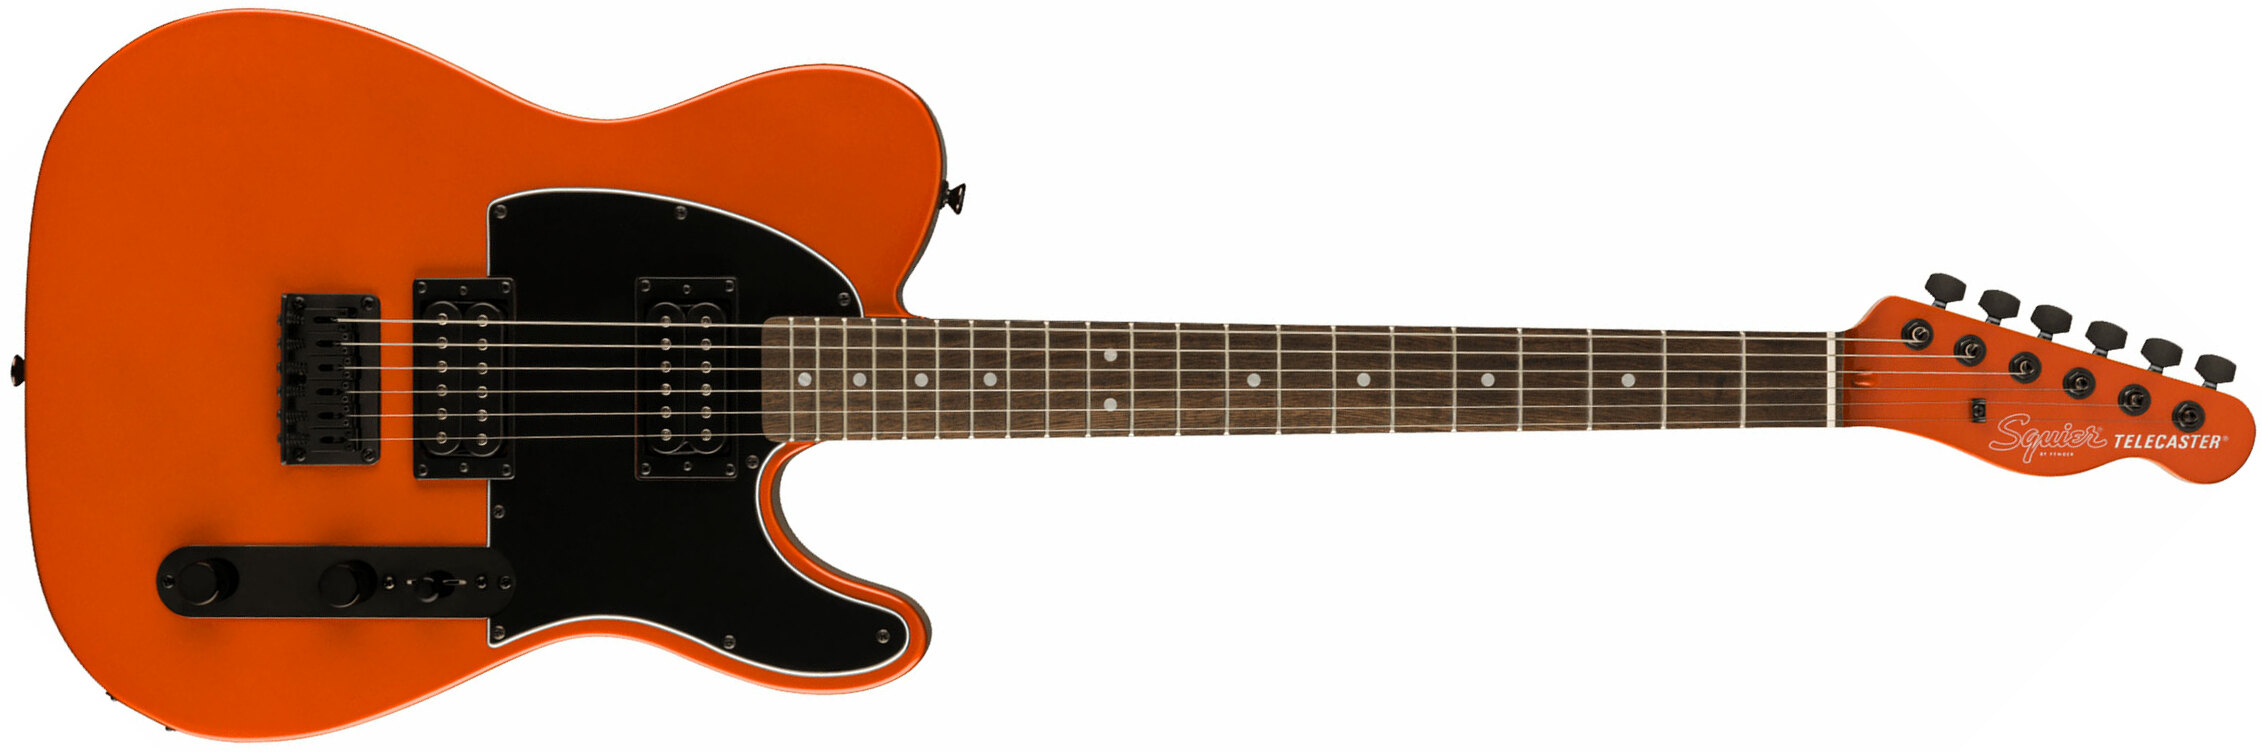 Squier Tele Affinity Hh Fsr 2h Ht Lau - Metallic Orange - Guitarra eléctrica con forma de tel - Main picture